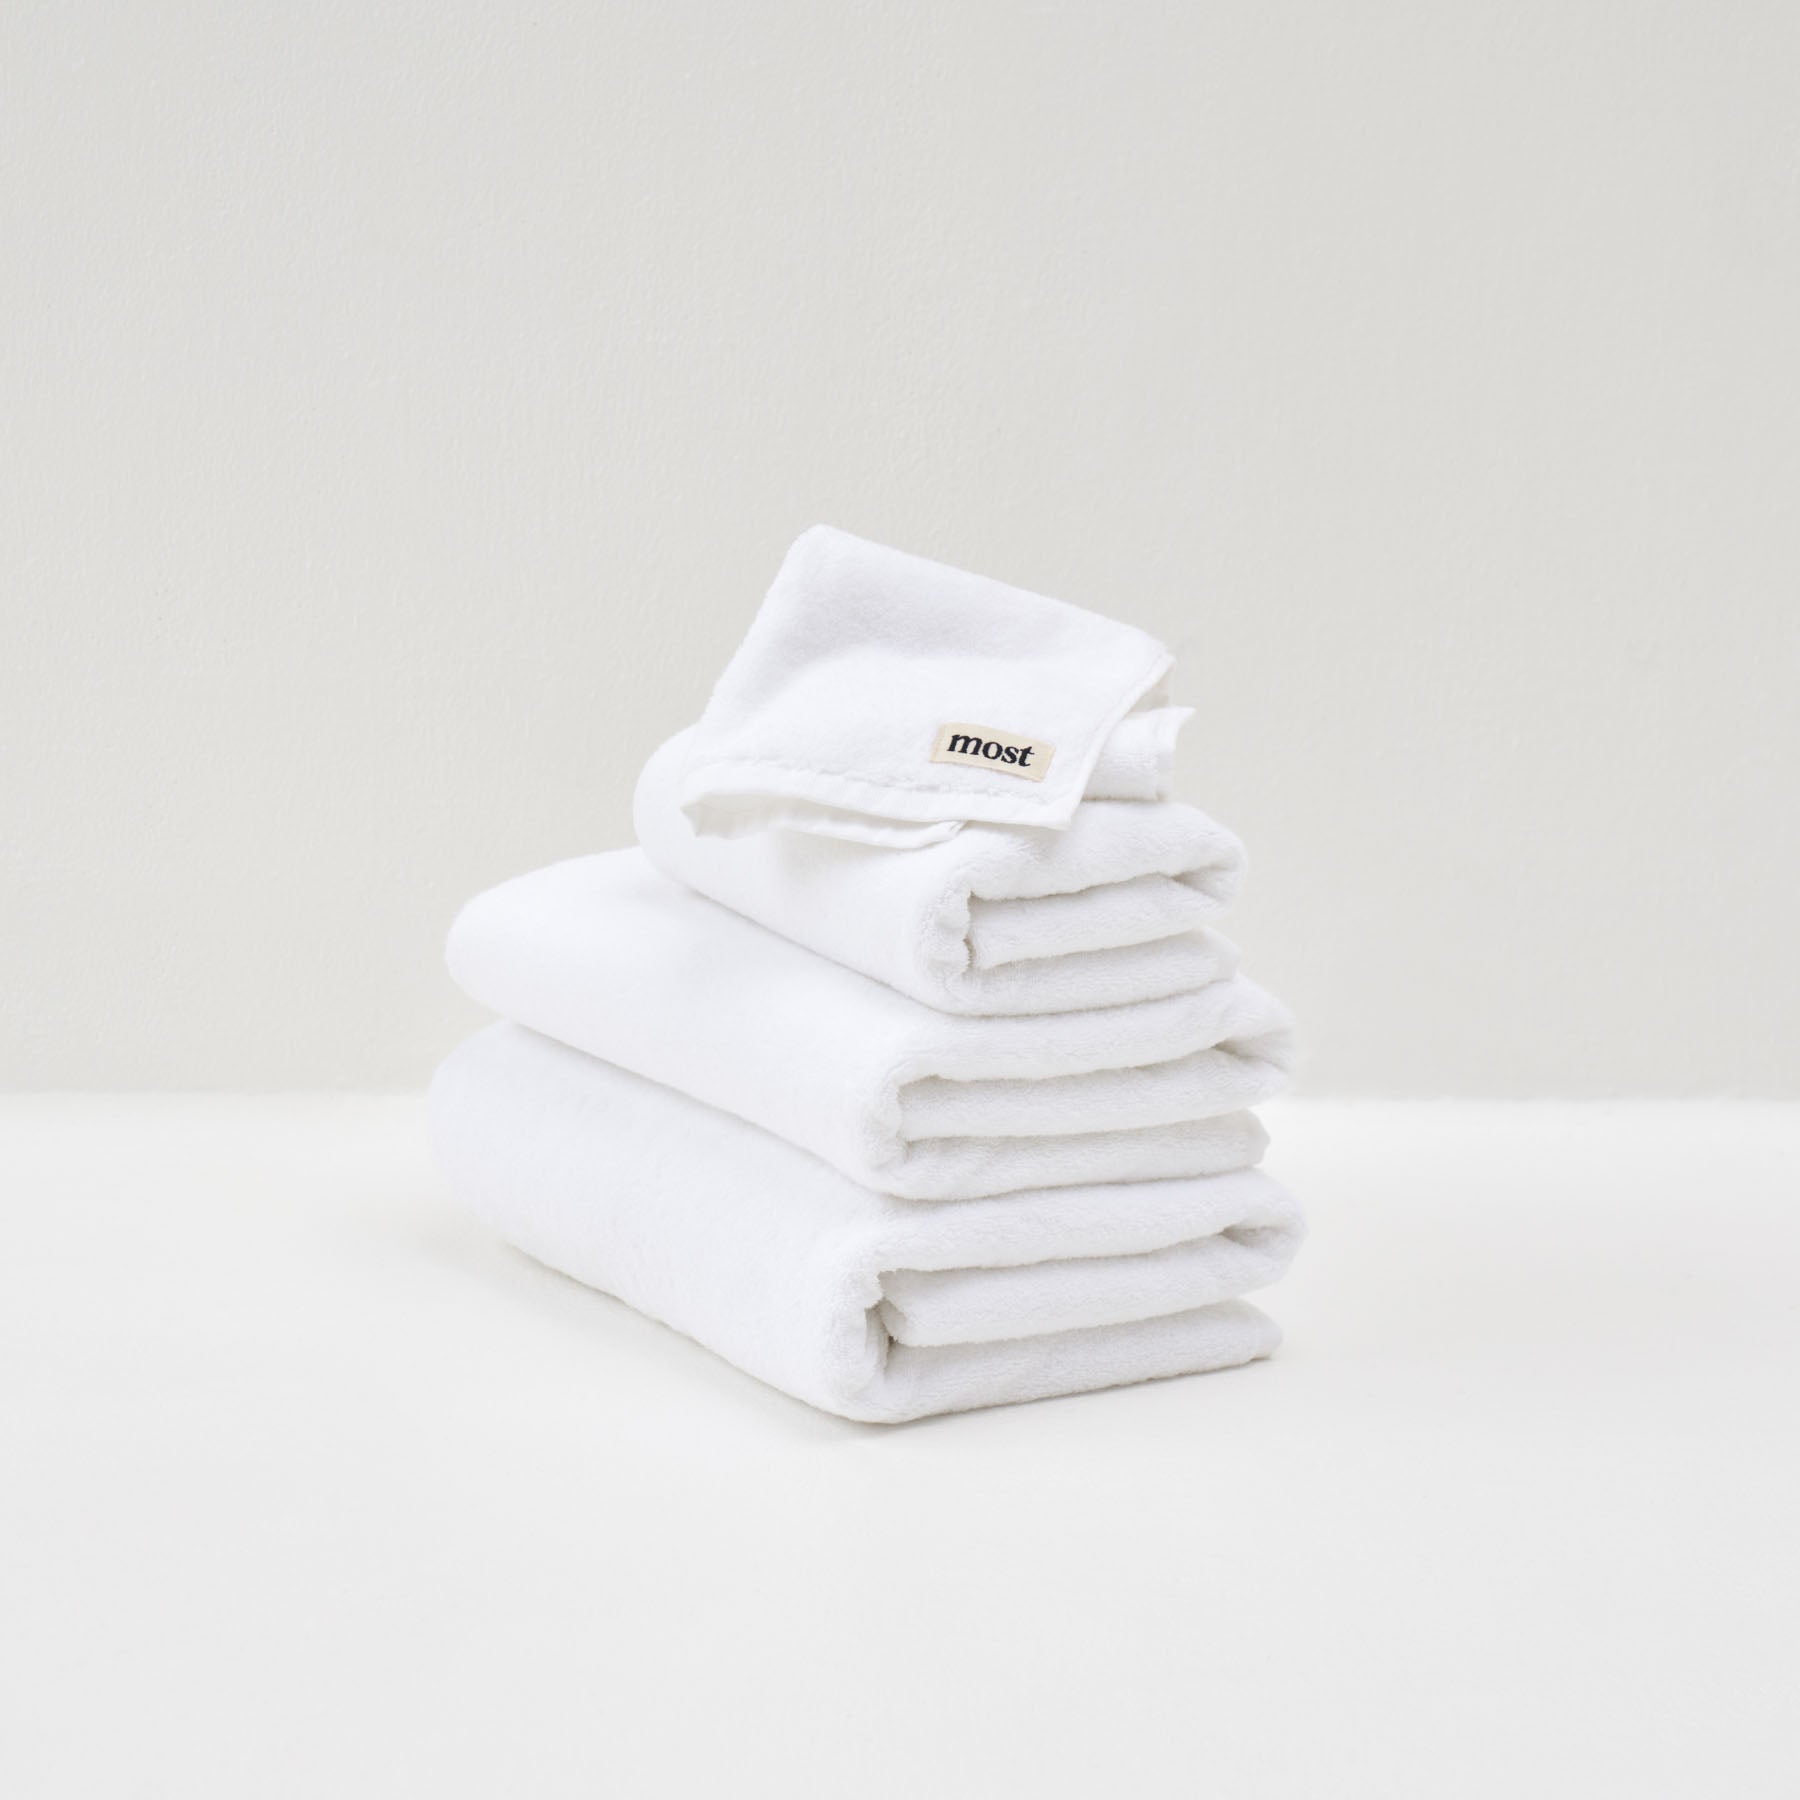 serviette de bain blanche coton bio portugal 600 grammes